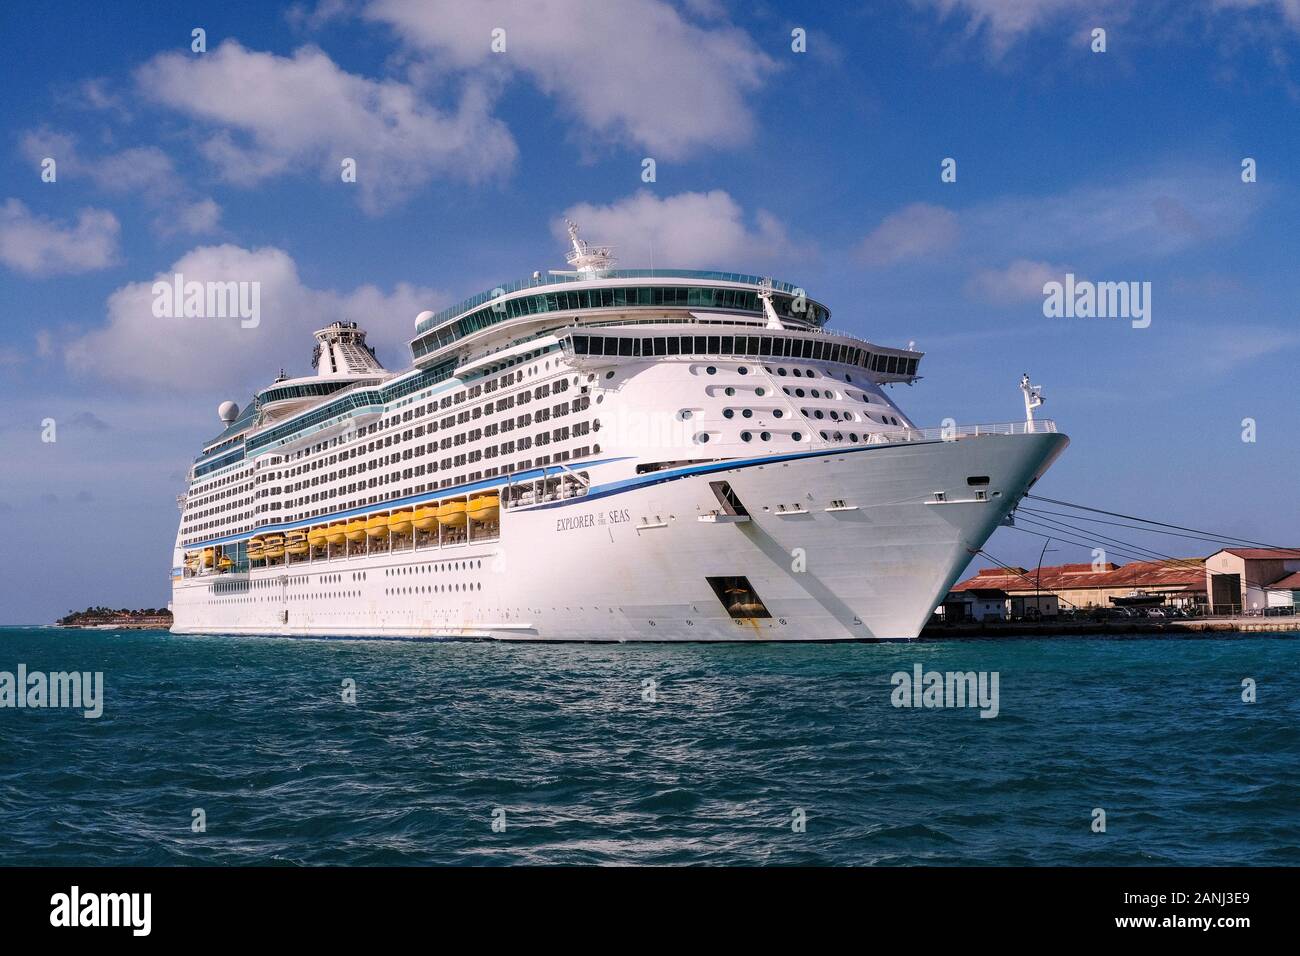 Die Royal Caribbean International, Voyager klasse, Explorer of the Seas Cruise Liner in Aruba in der Niederländischen Karibik günstig. Stockfoto